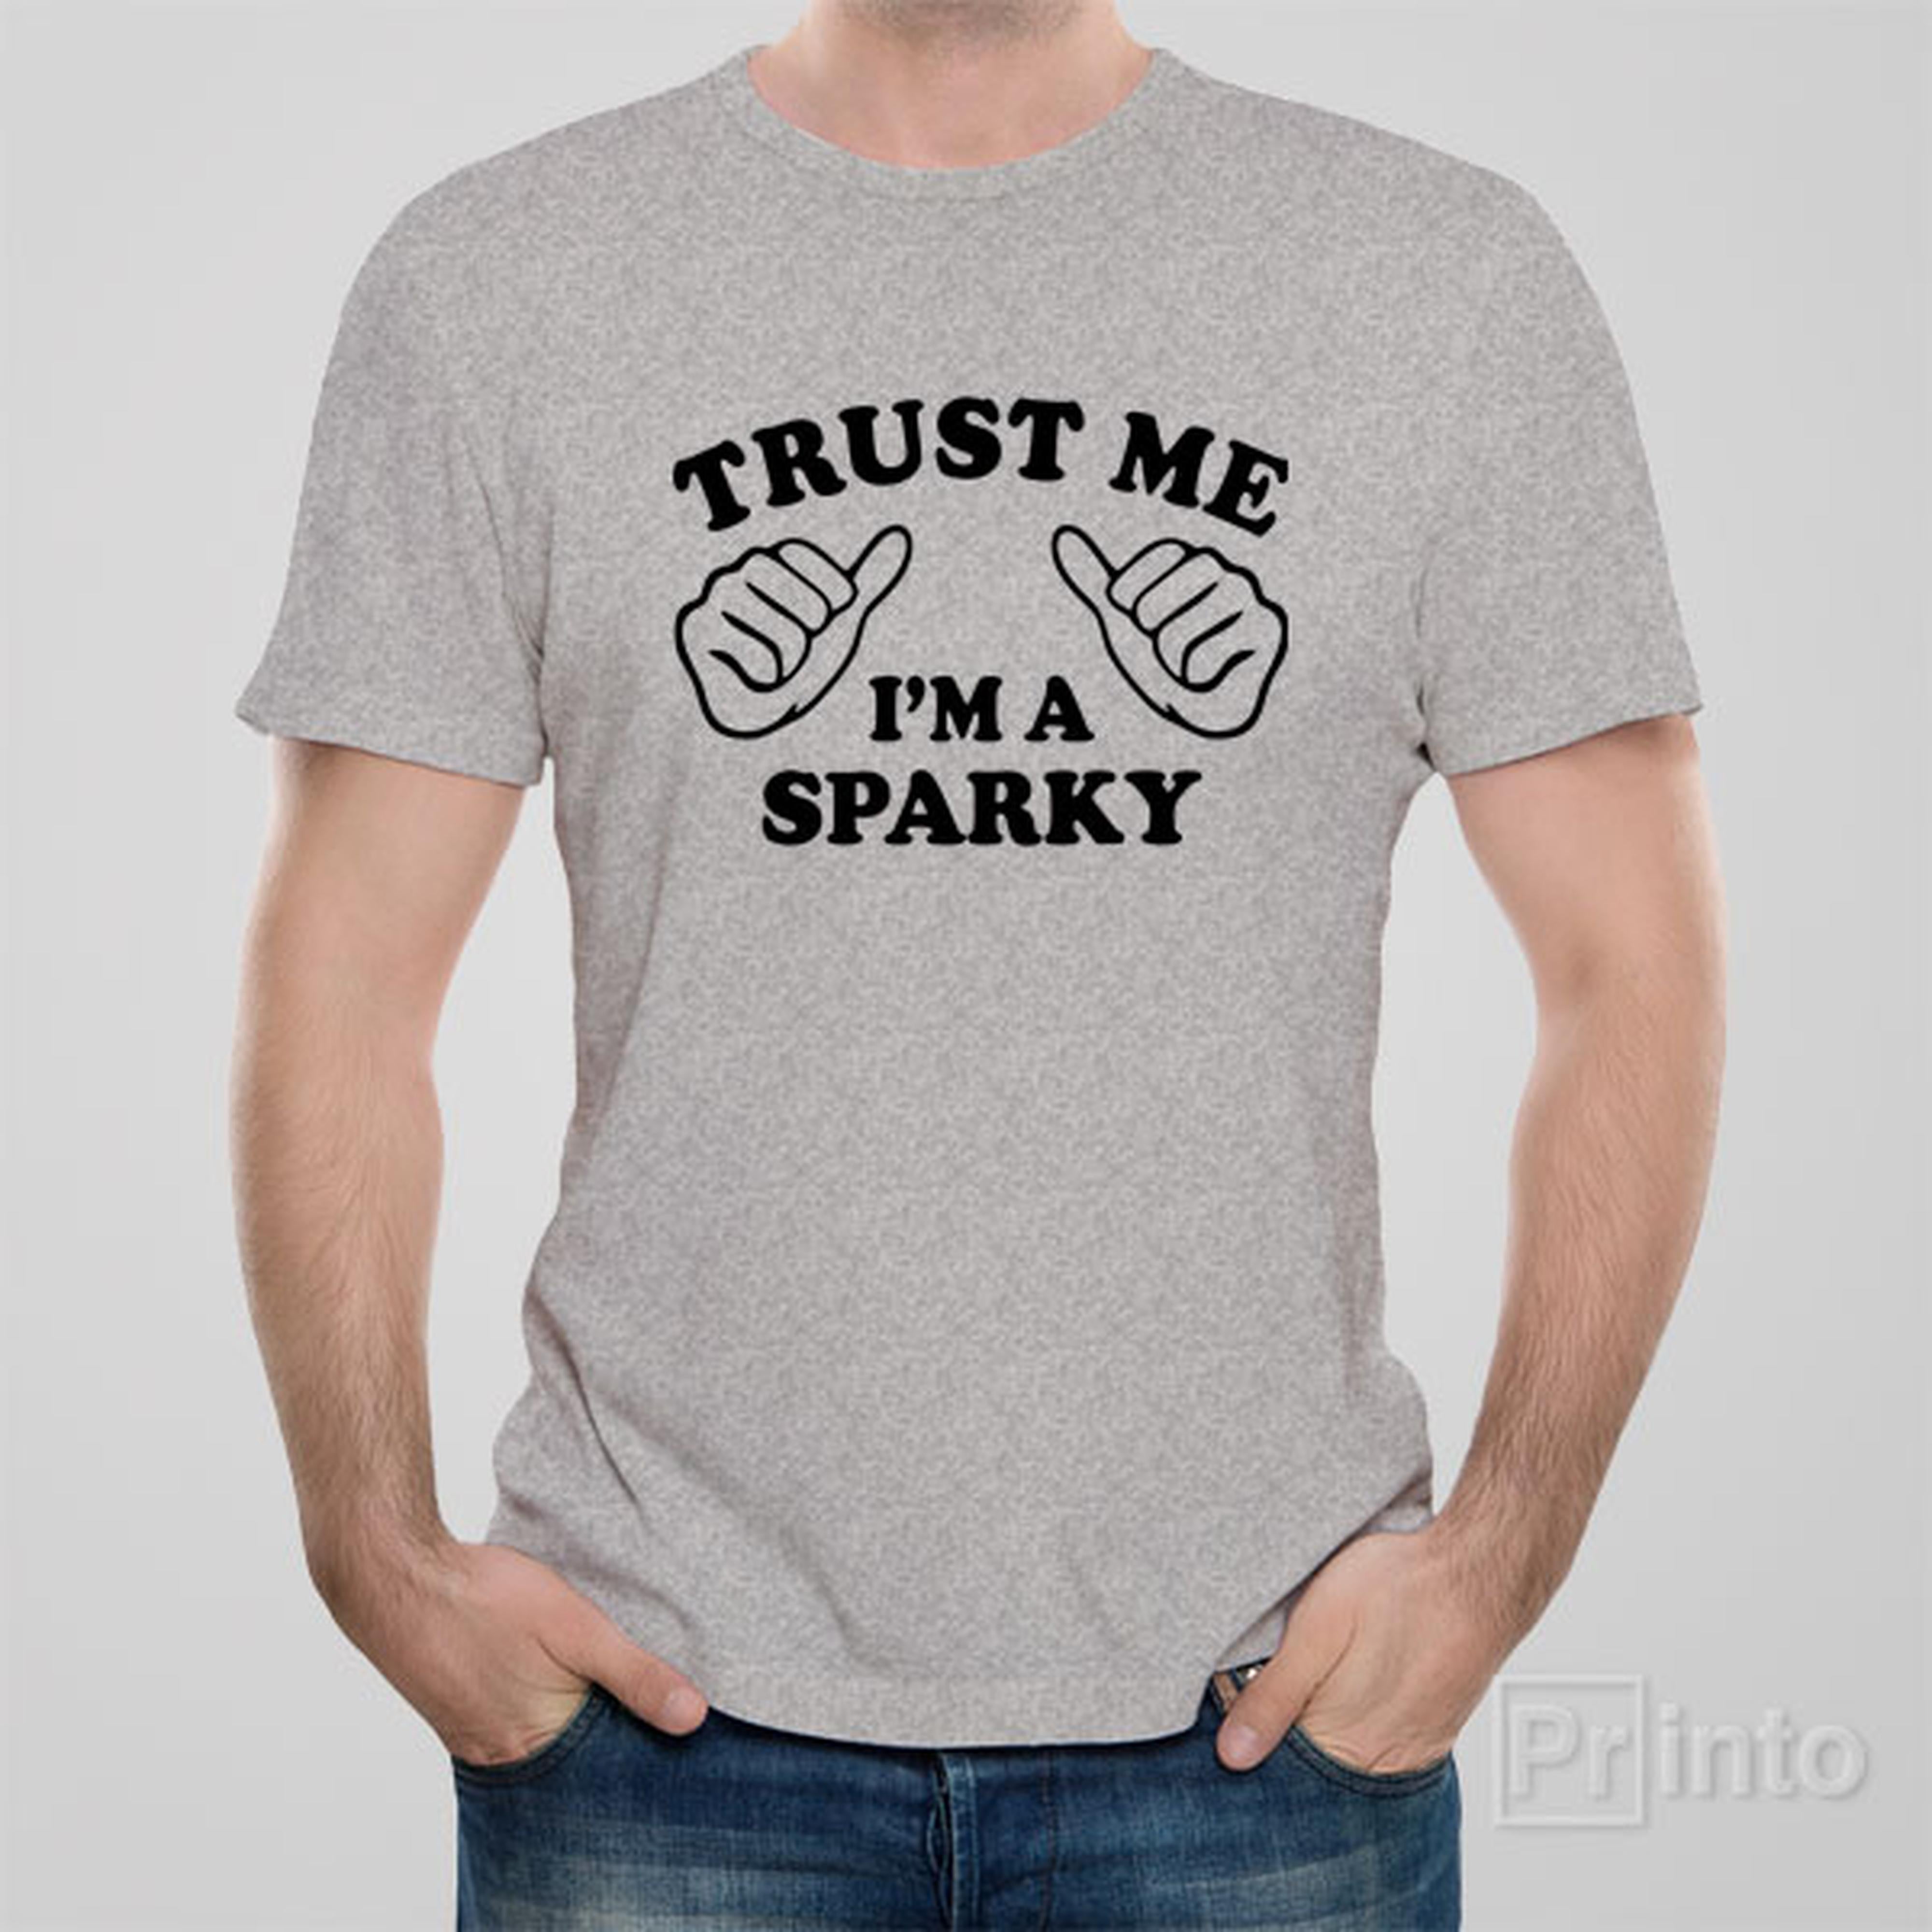 trust-me-i-am-a-sparky-t-shirt